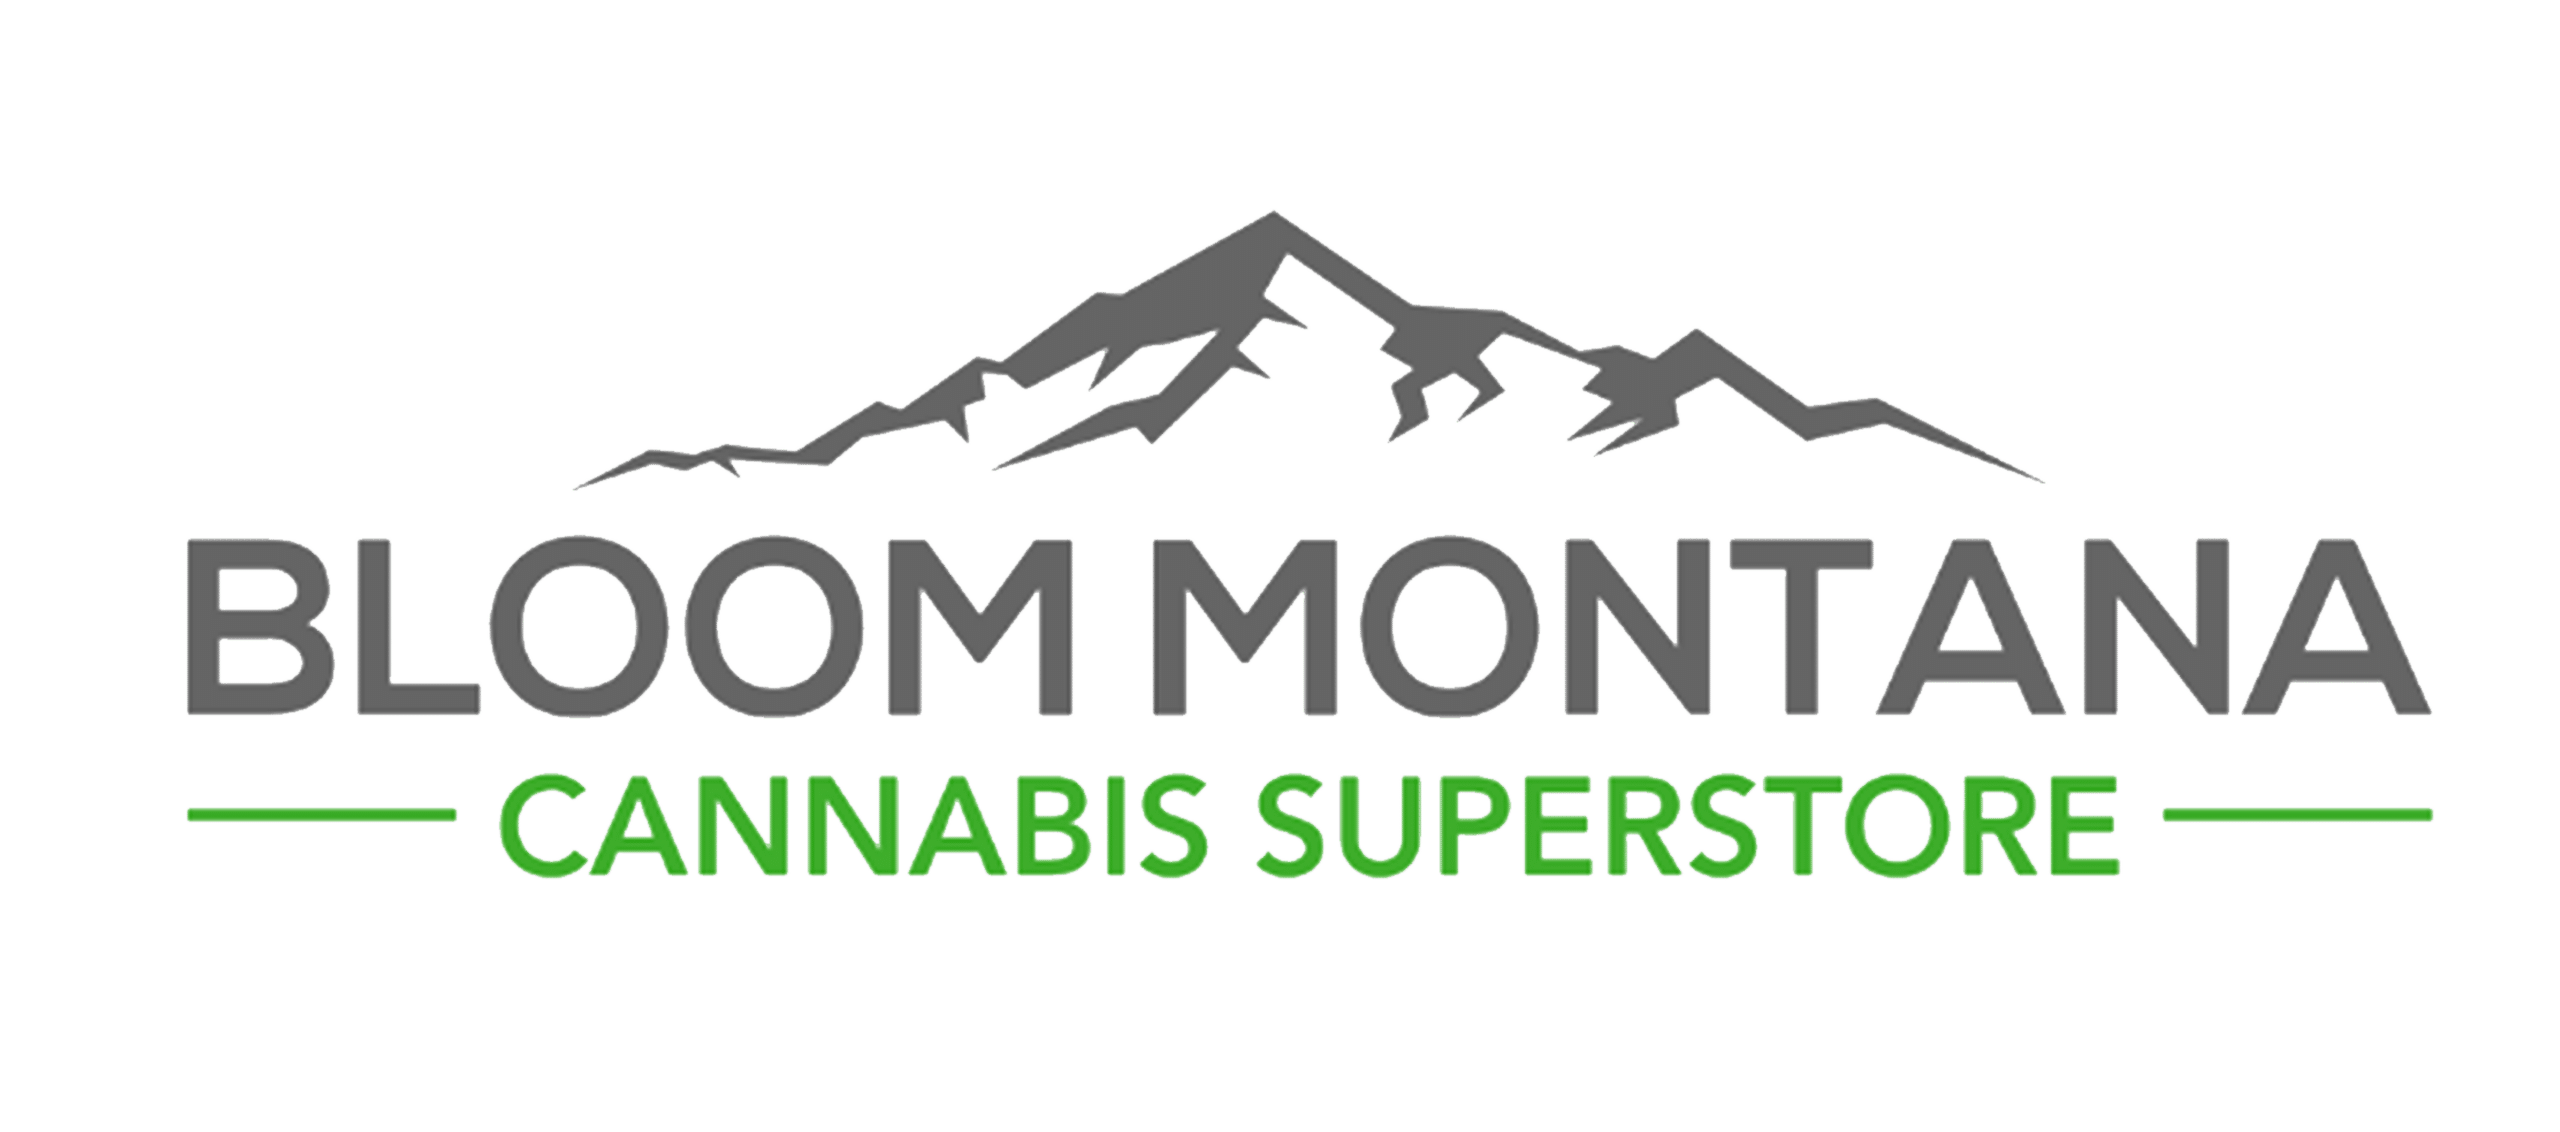 Bloom Montana Cannabis Superstore Logo